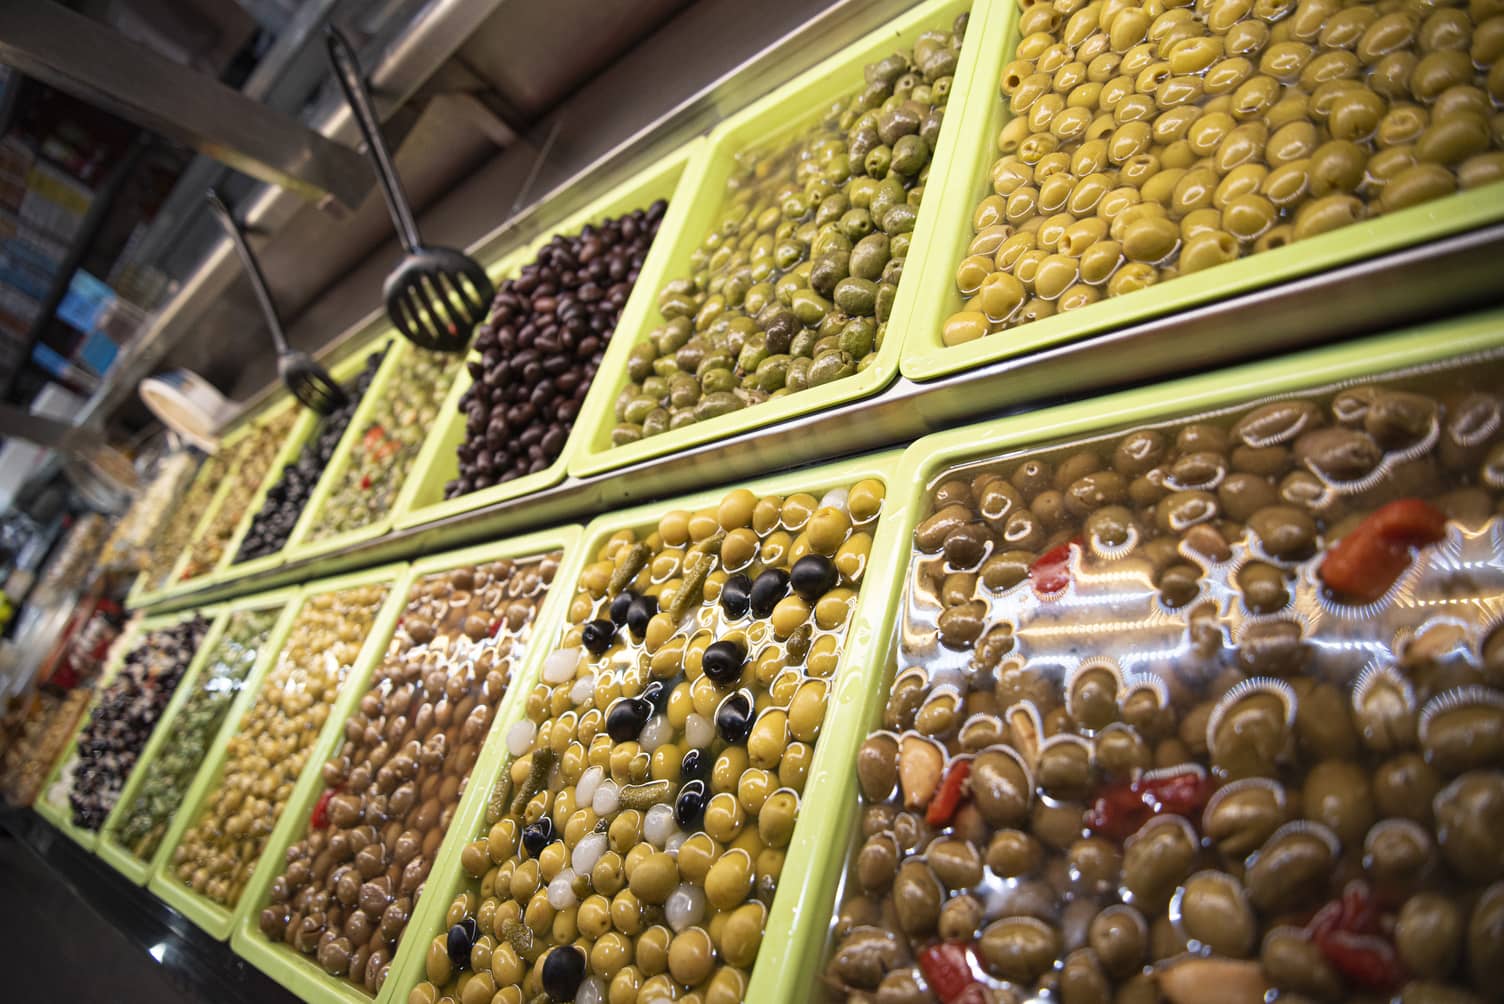 Gran varietat d'olives - aragó sevillana morada caspe cogombres cebes perla baixa en sal chupa dedos abuela gazpacha àvia sense pinyol